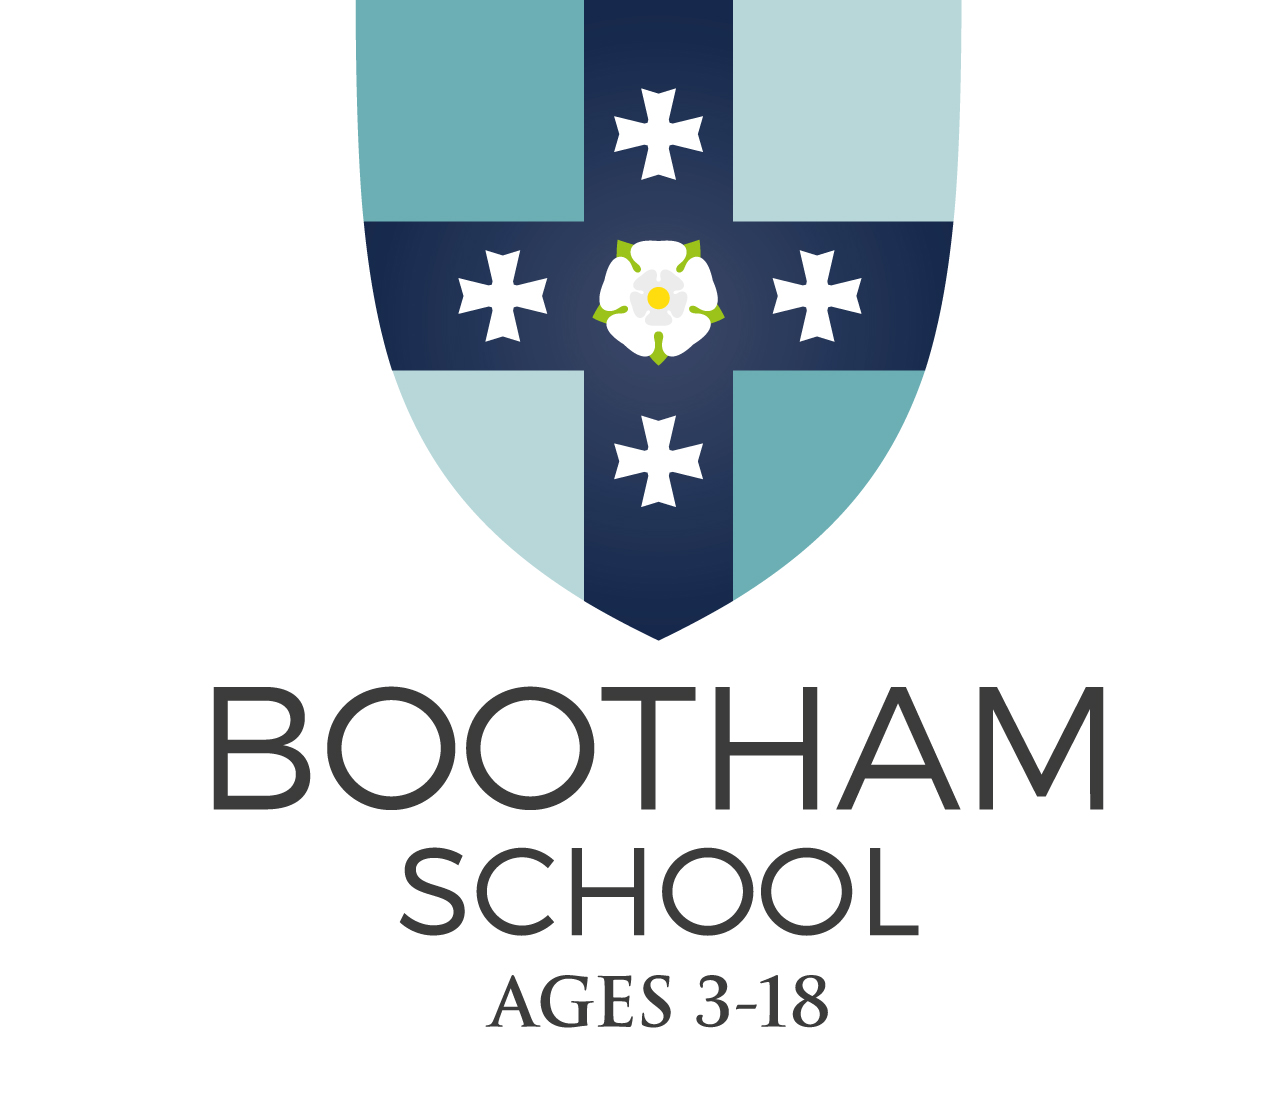 Bootham-School-stacked-logo.jpg